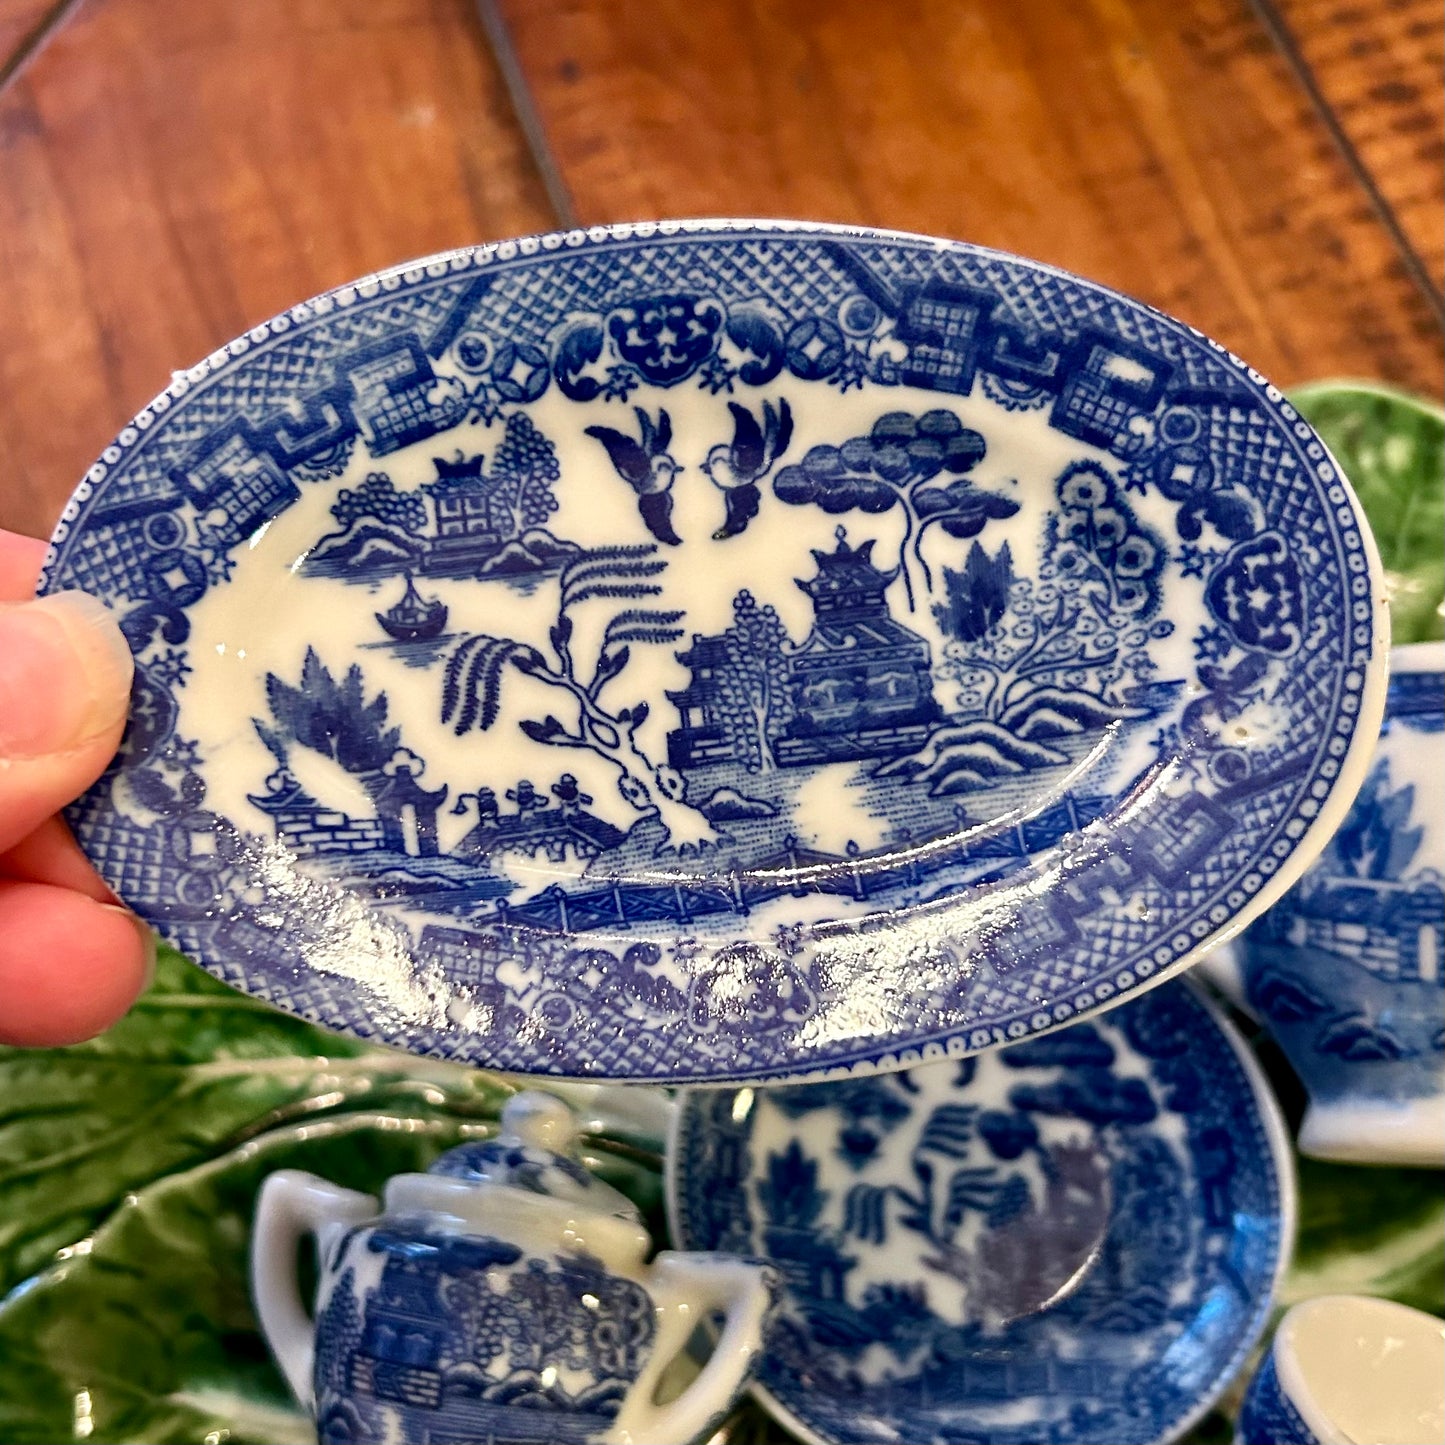 Set of 7 miniature blue and white chinoiserie tea set